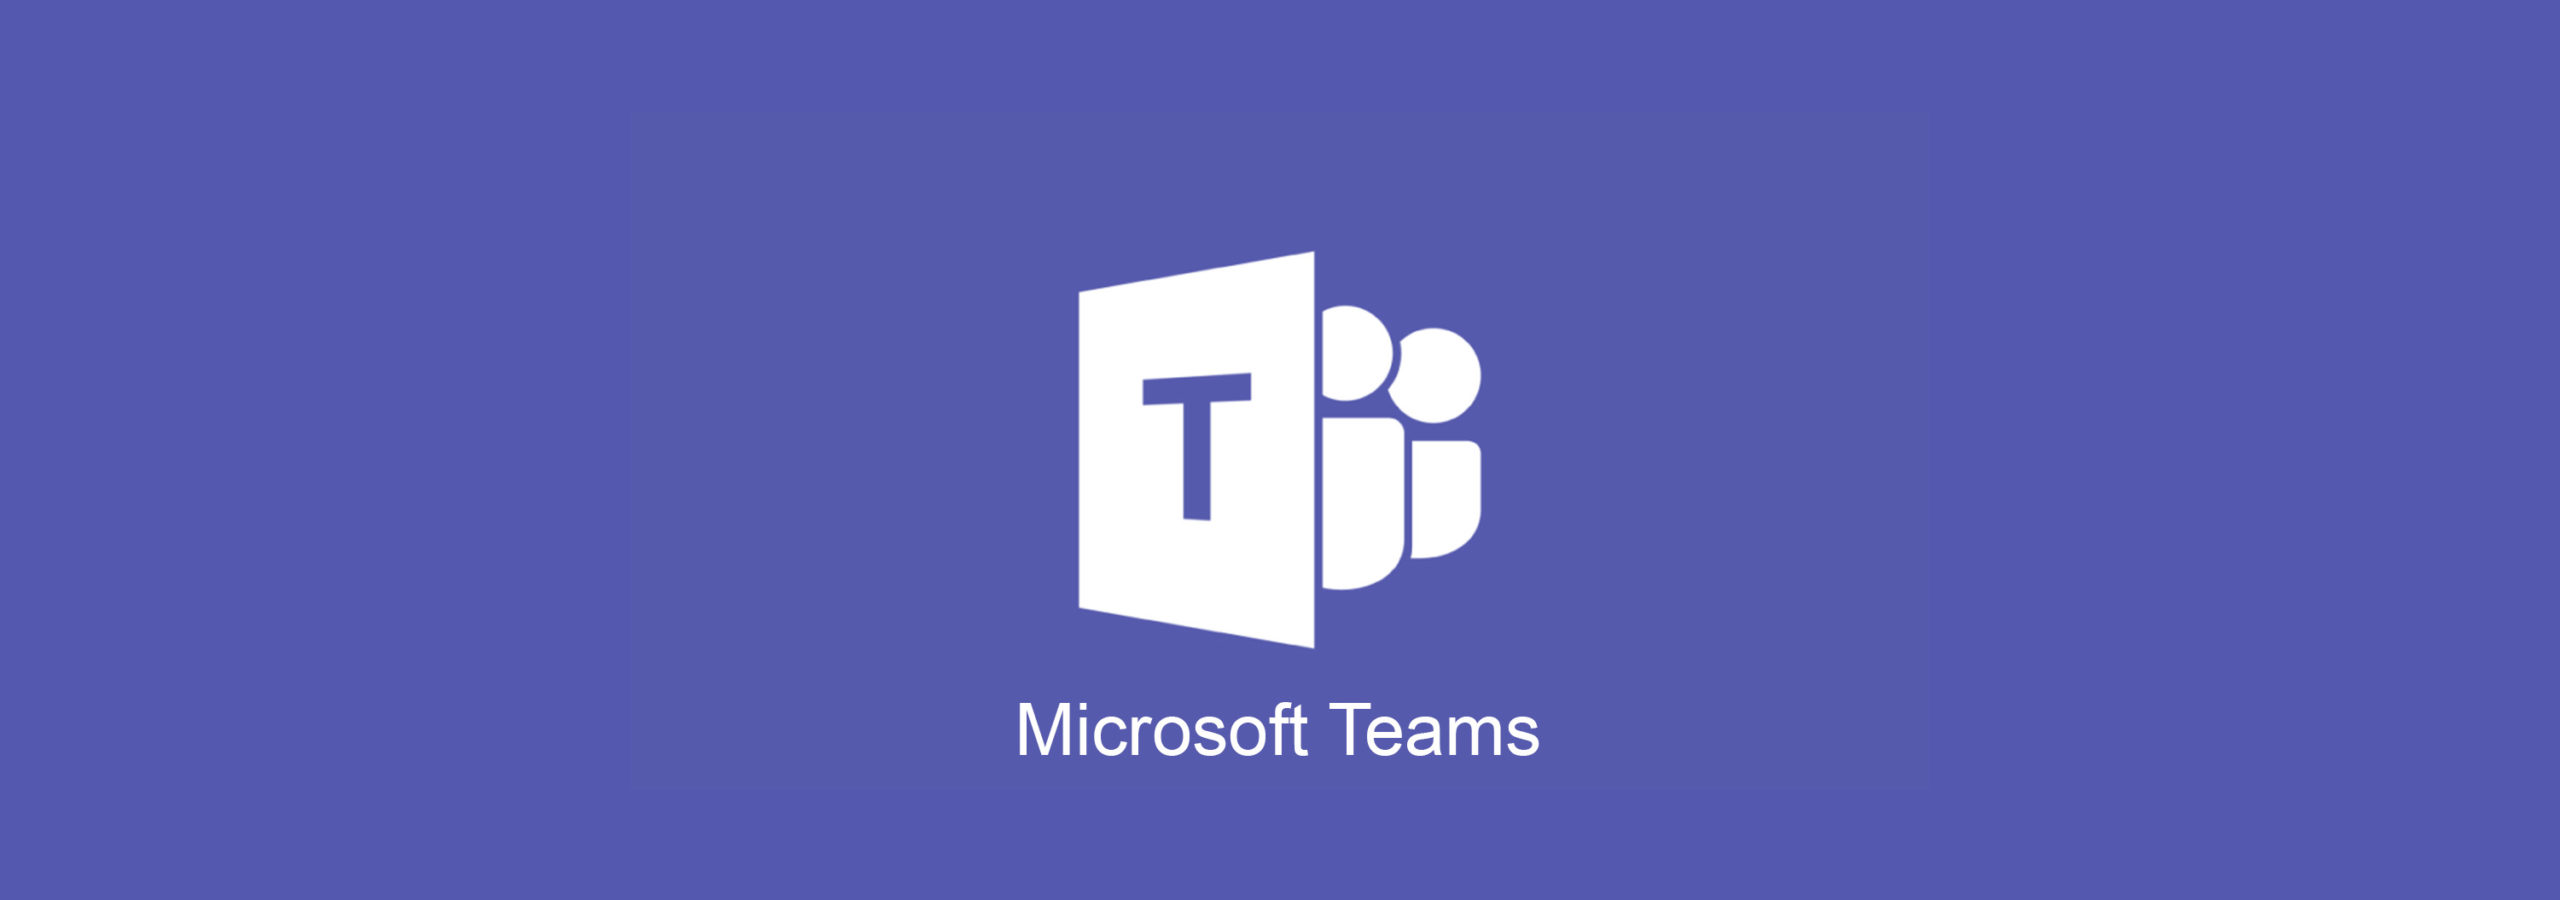 Microsoft Teams Devices - Call One, Inc Microsoft Teams